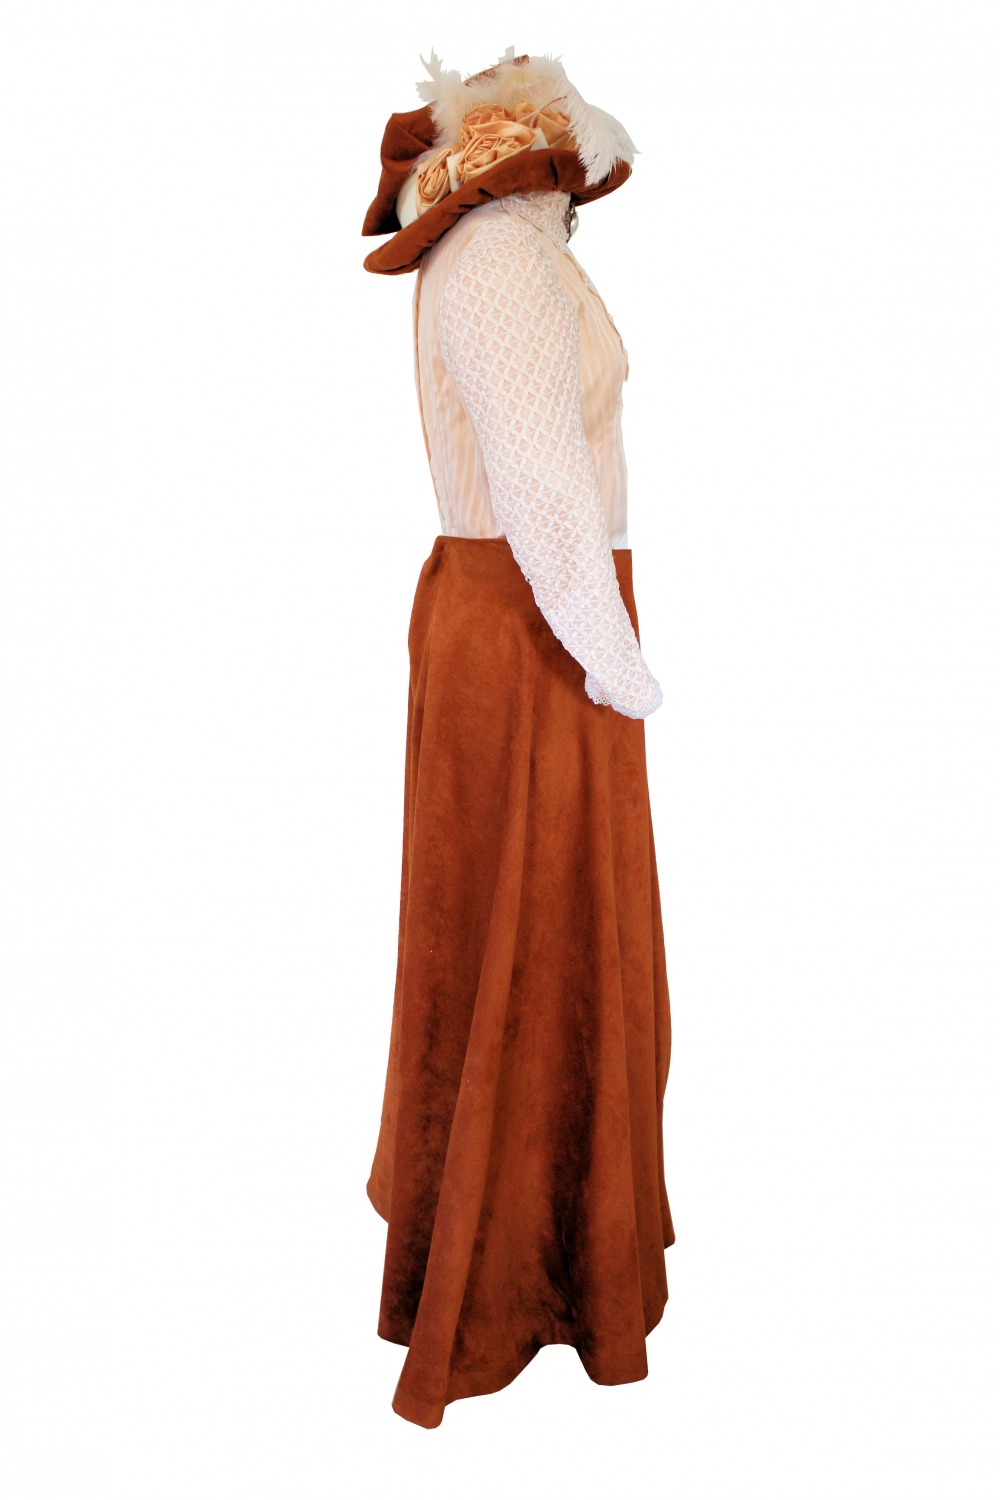 Ladies Edwardian Suffragette Downton Abbey Titanic Costume Size 14 - 16 Image